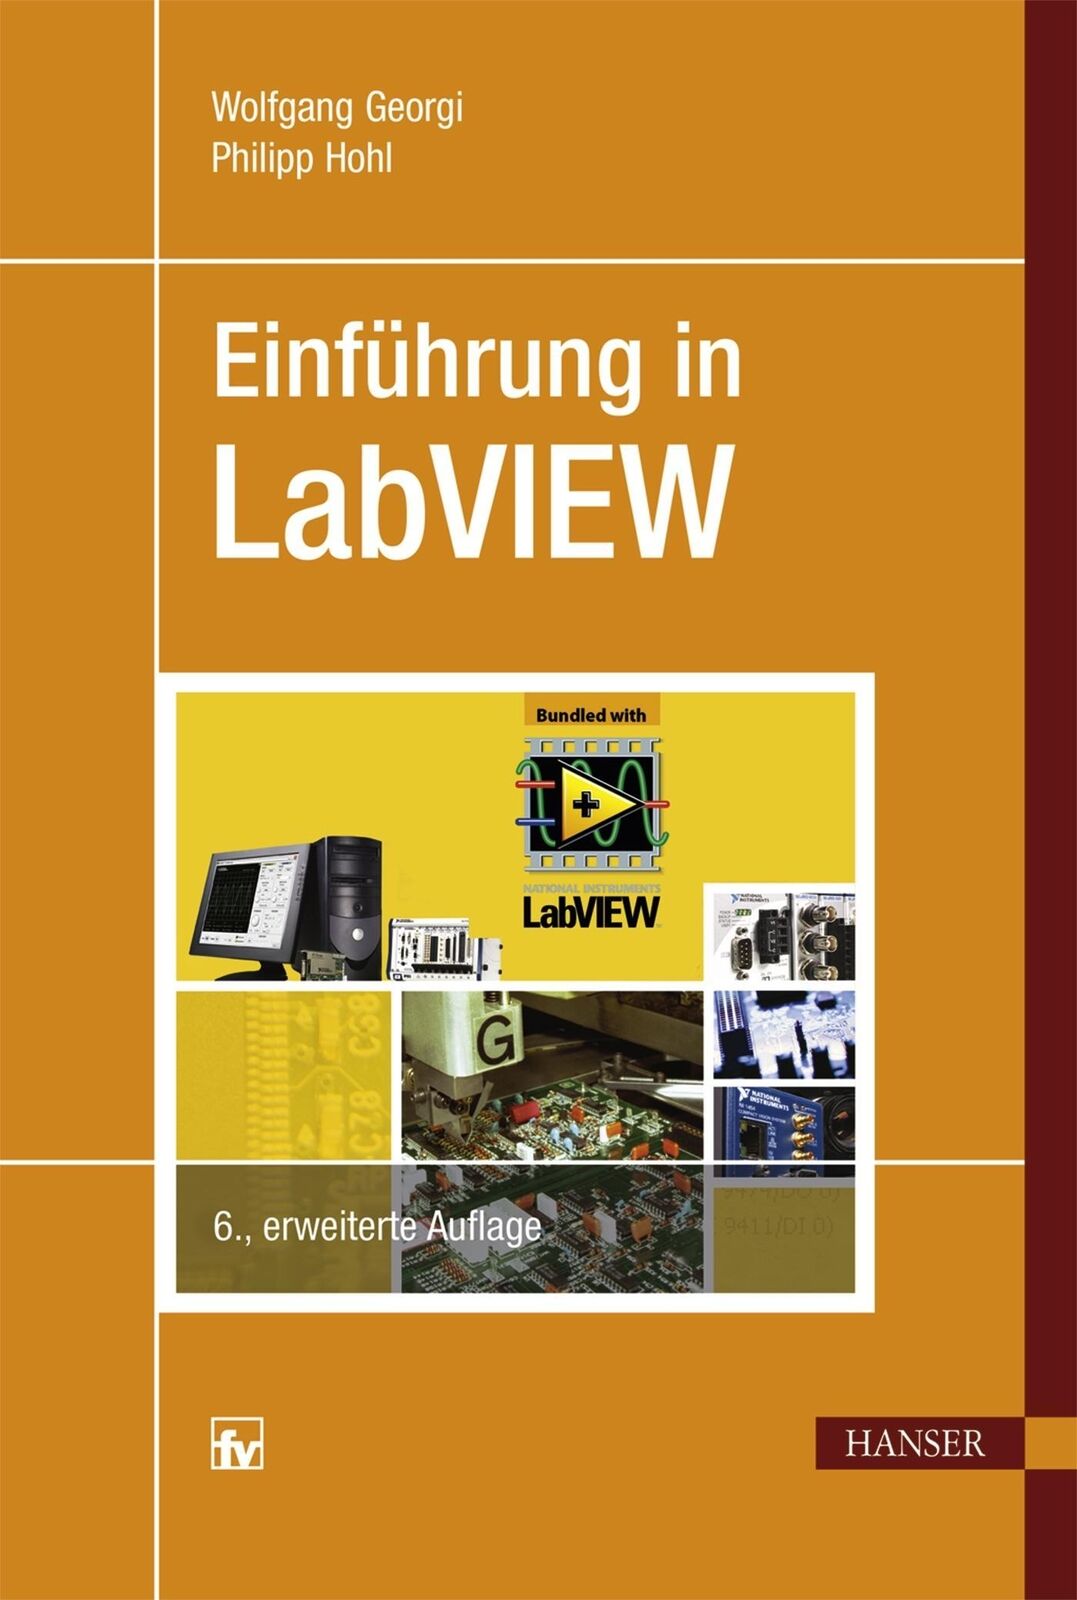 Einführung in LabVIEW Wolfgang Georgi